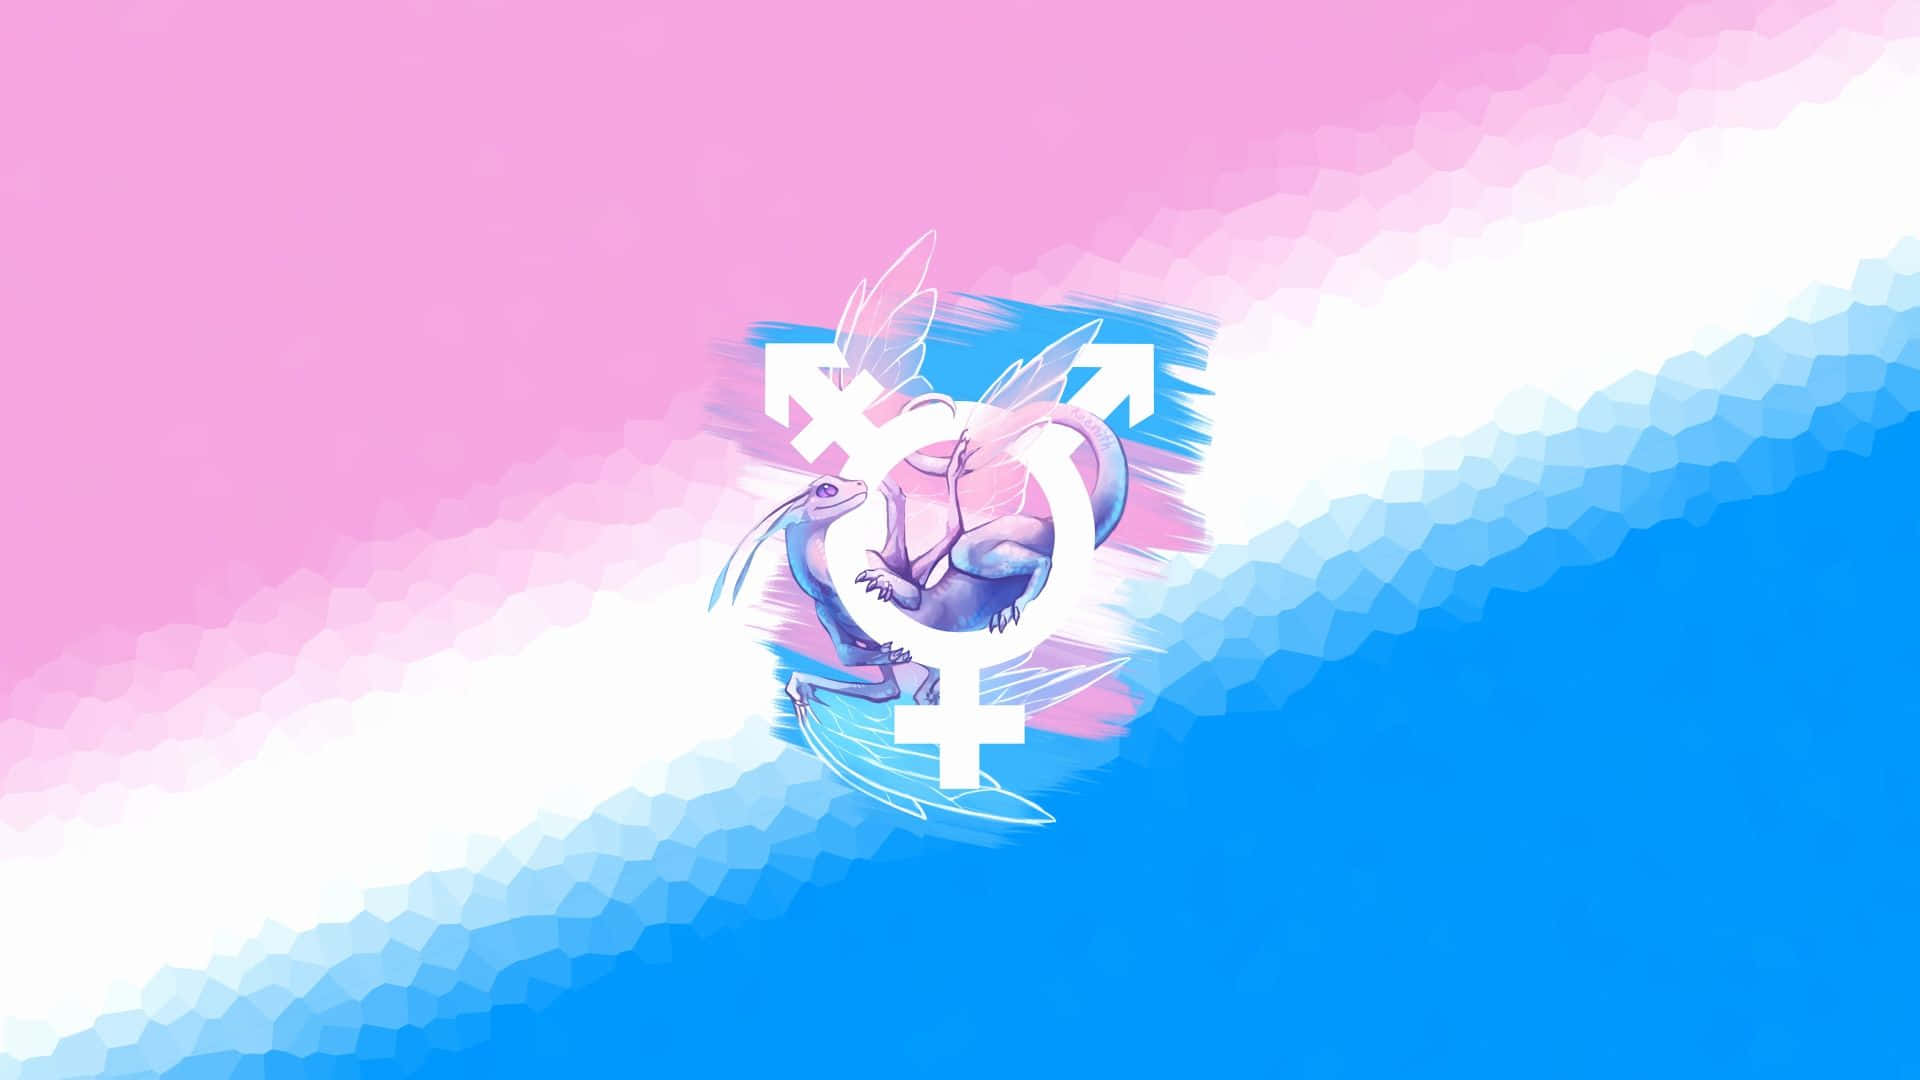 Trans Symbol With A Dragon